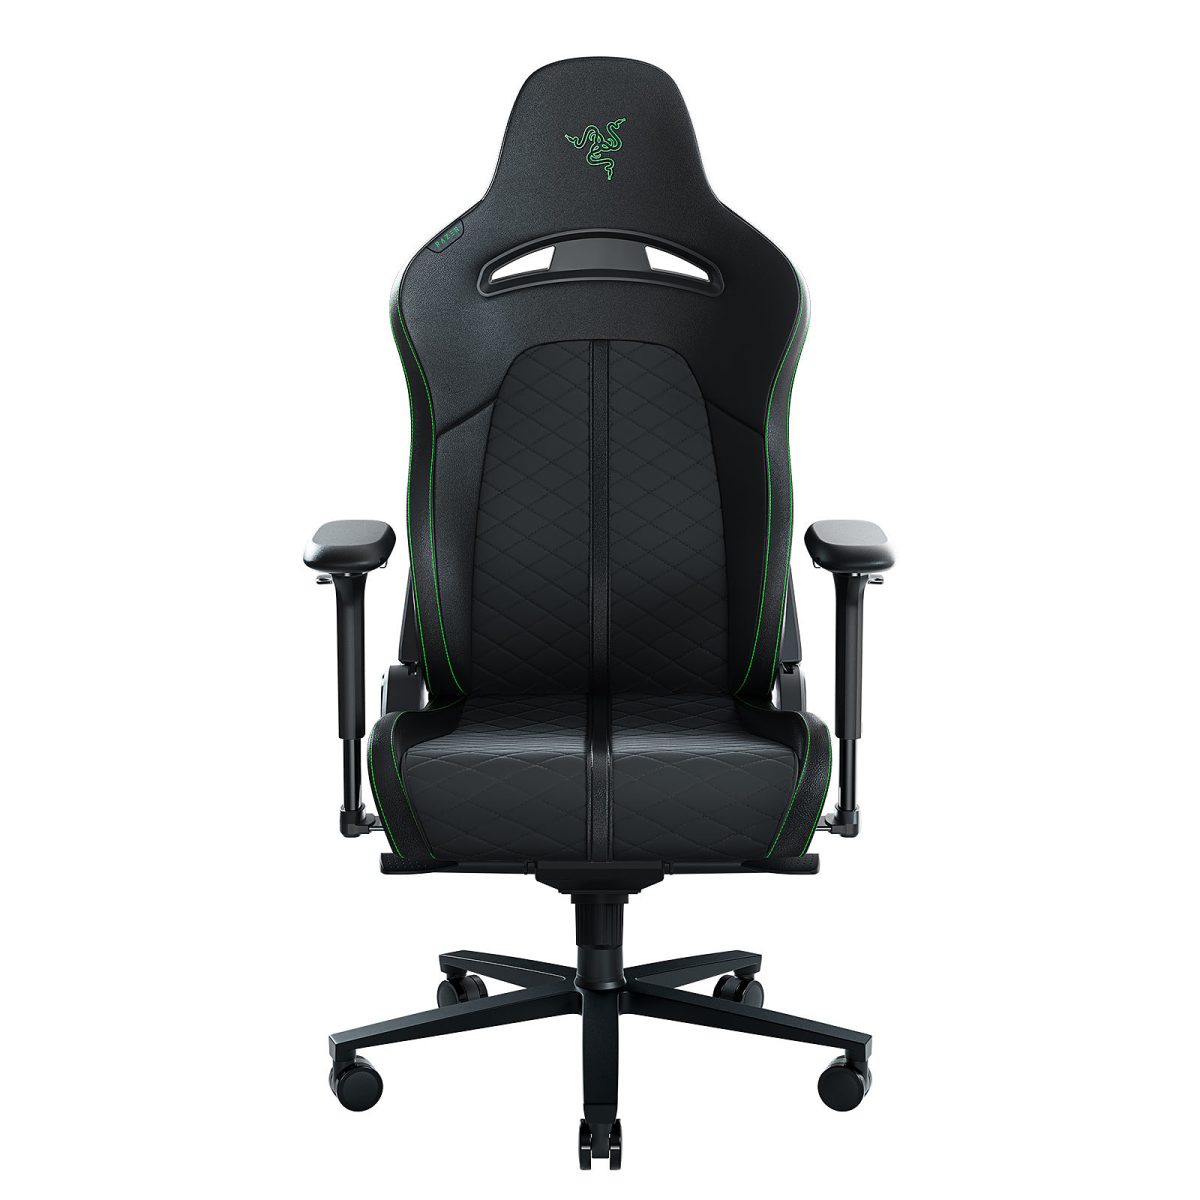 Razer ENKI Gaming Chair Black/Green - Built-in Lumbar Arch Memory Foam PU Leather Adjustable Recline - Razer 1.28.80.02.023